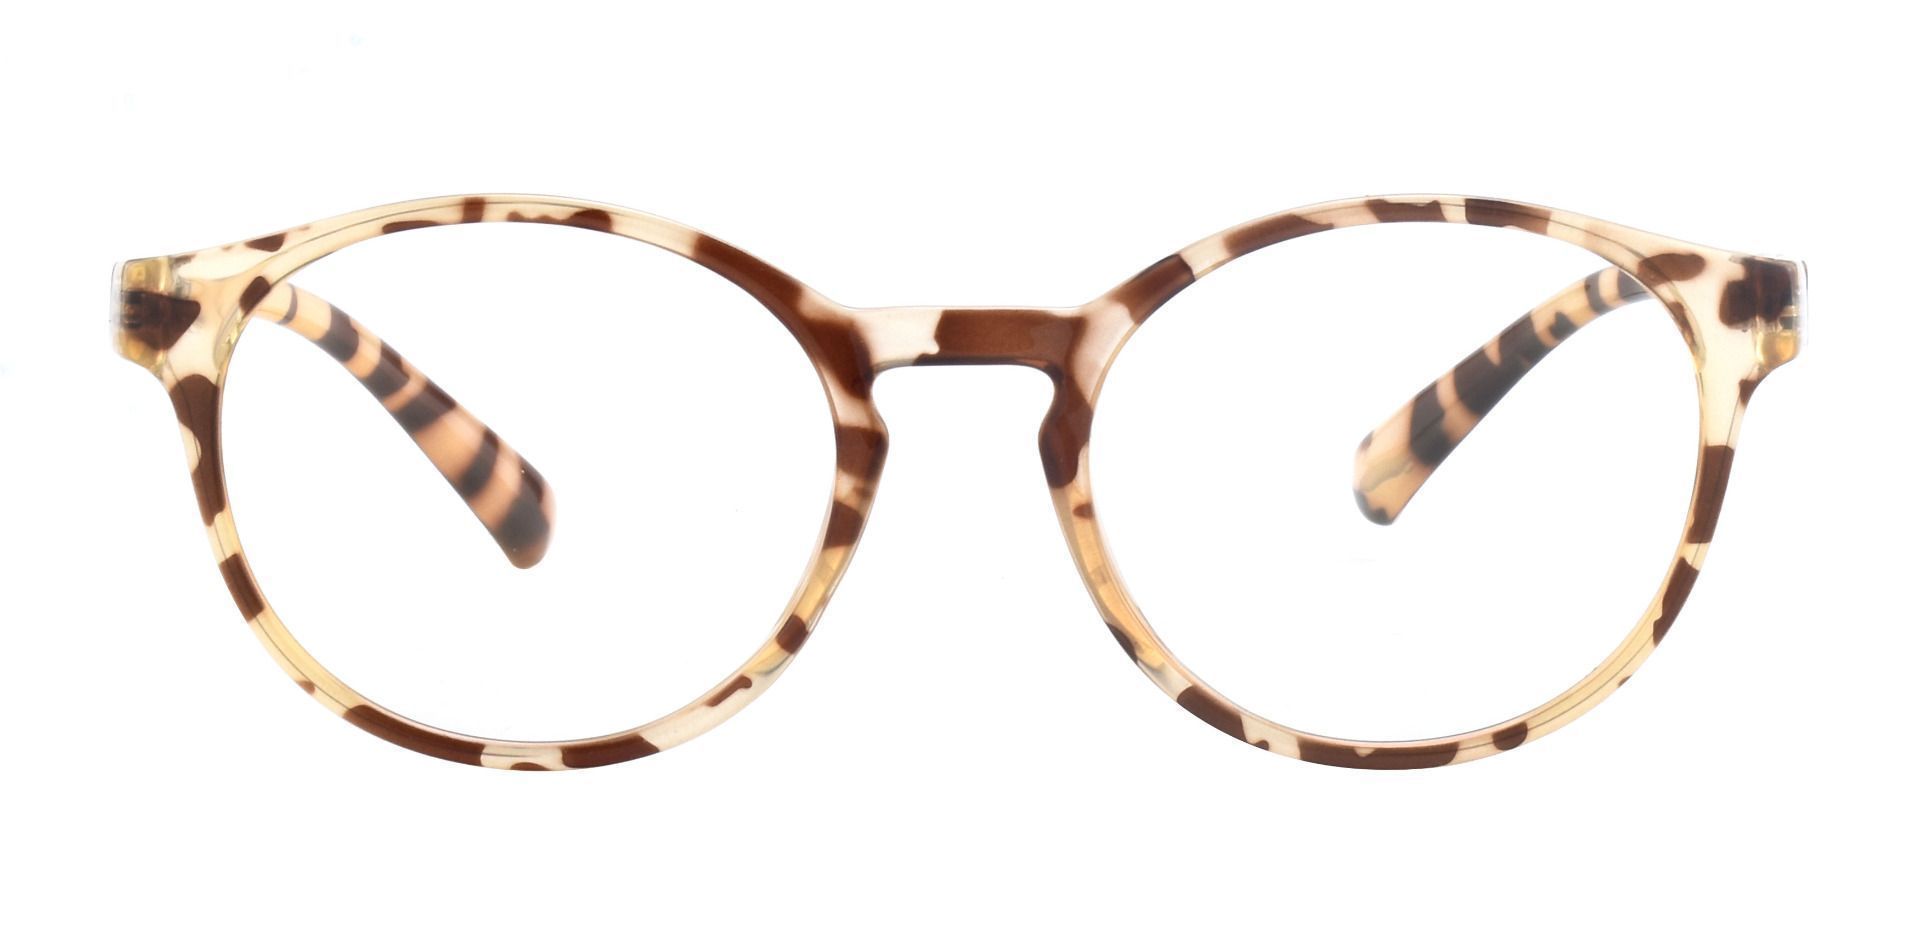 Safari Oval Prescription Glasses - Crystal Brown Cheetah Print